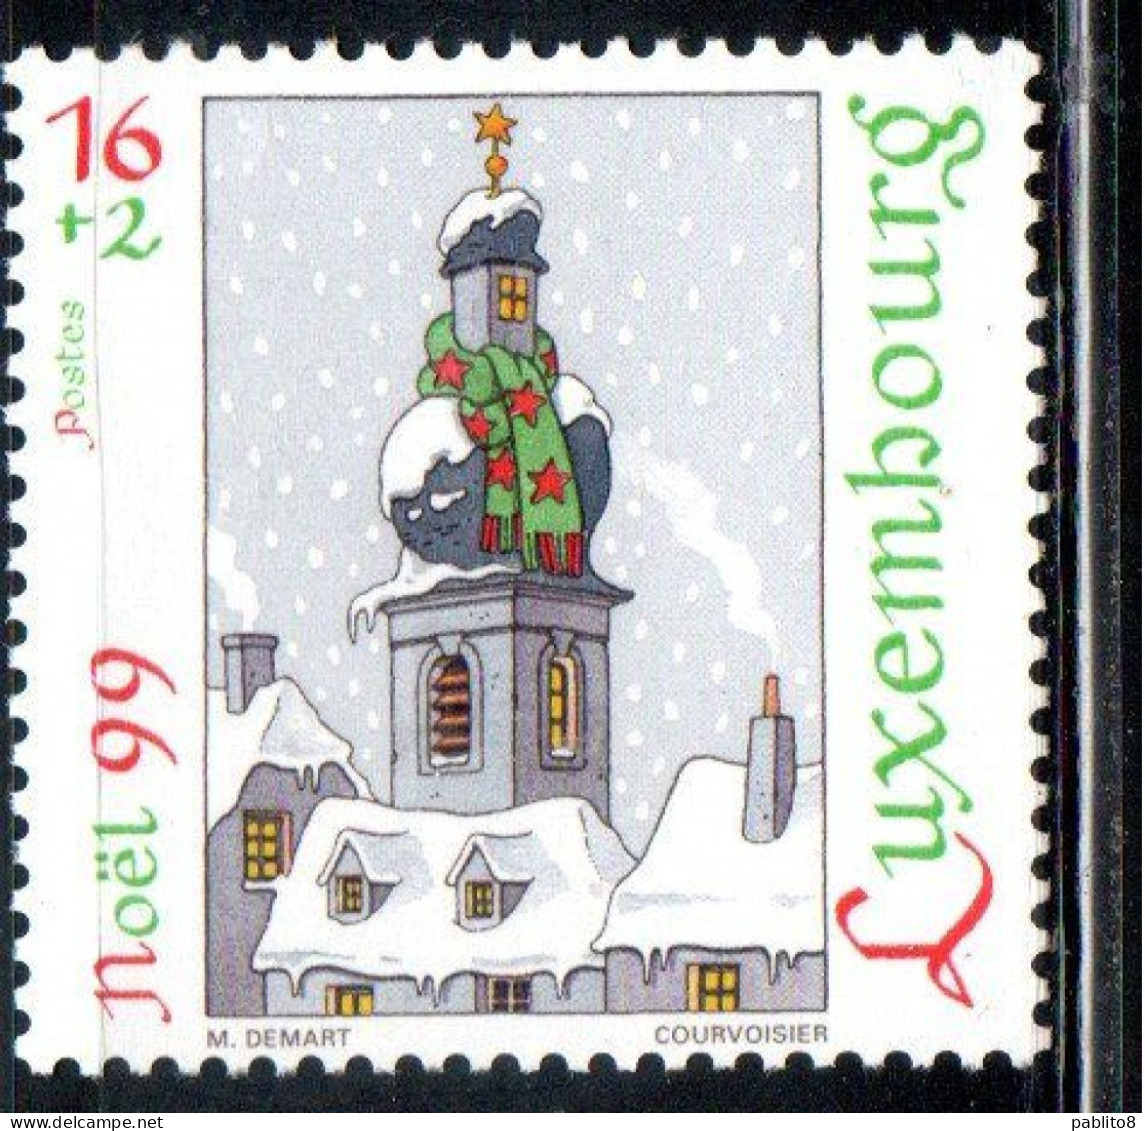 LUXEMBOURG LUSSEMBURGO 1999 CHRISTMAS NATALE NOEL WEIHNACHTEN NAVIDAD 16 +2 MNH - Neufs